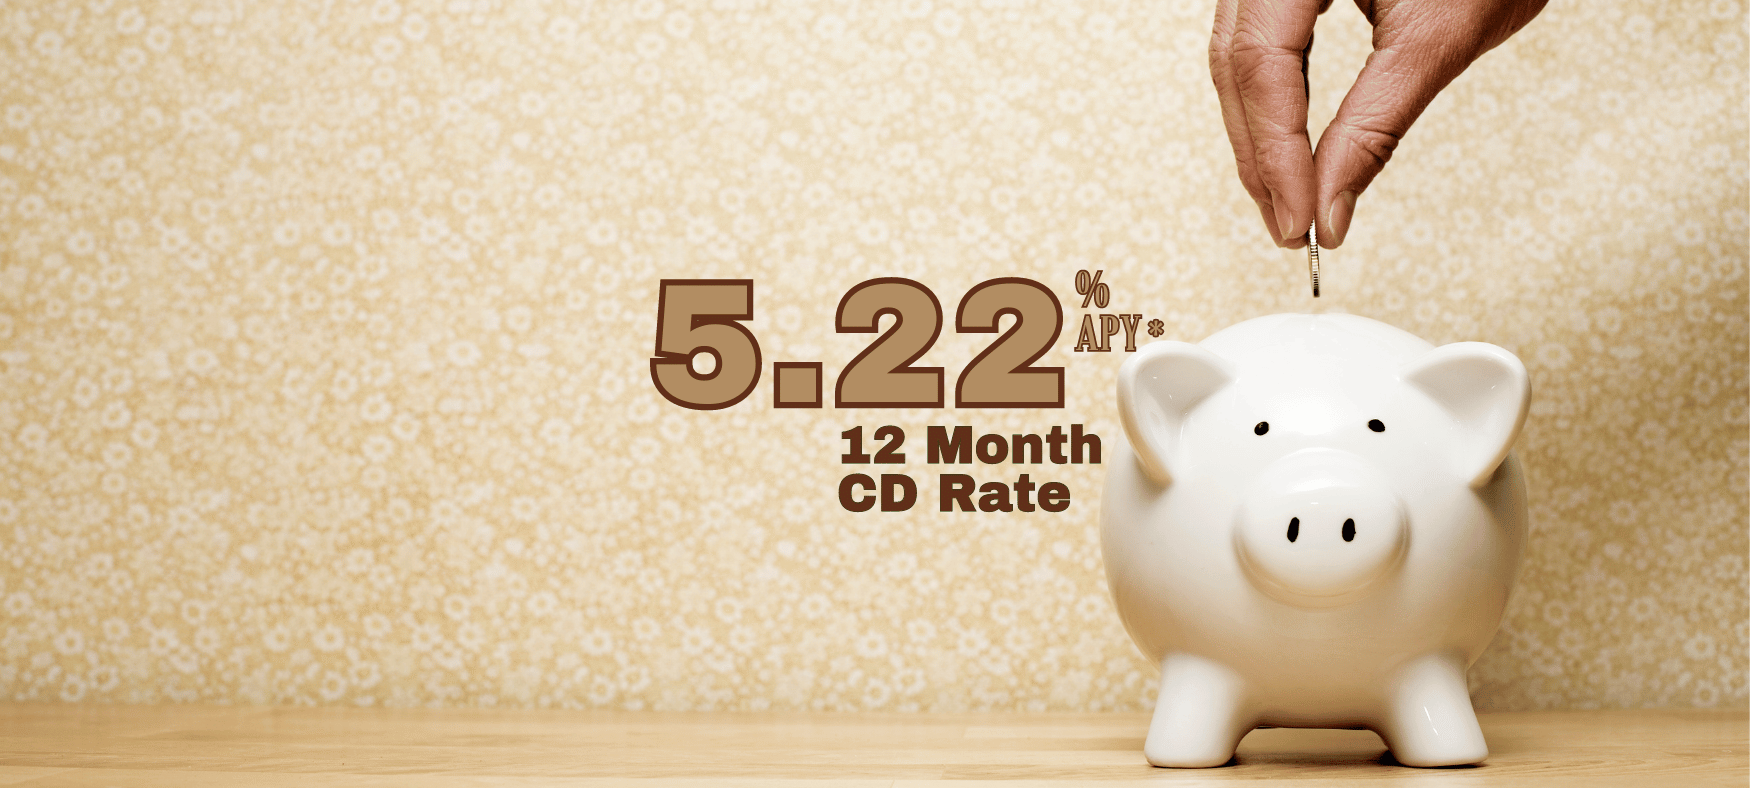 twelve month certificate of deposit rate